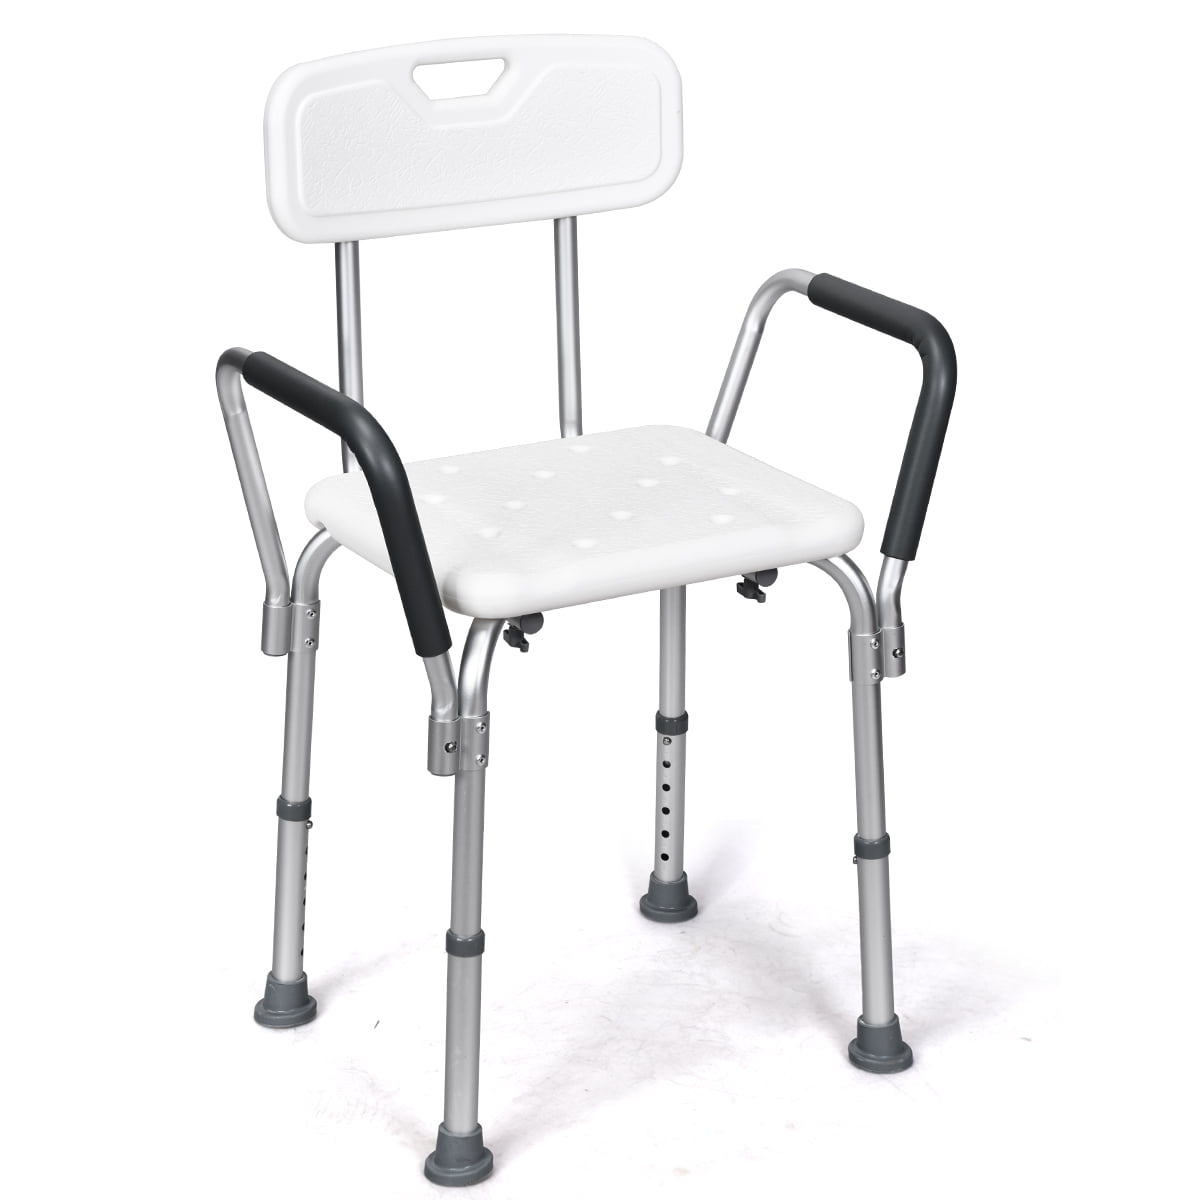 Costway Shower Bath Chair 6 Adjustable Height Bathtub Stool Wremovable